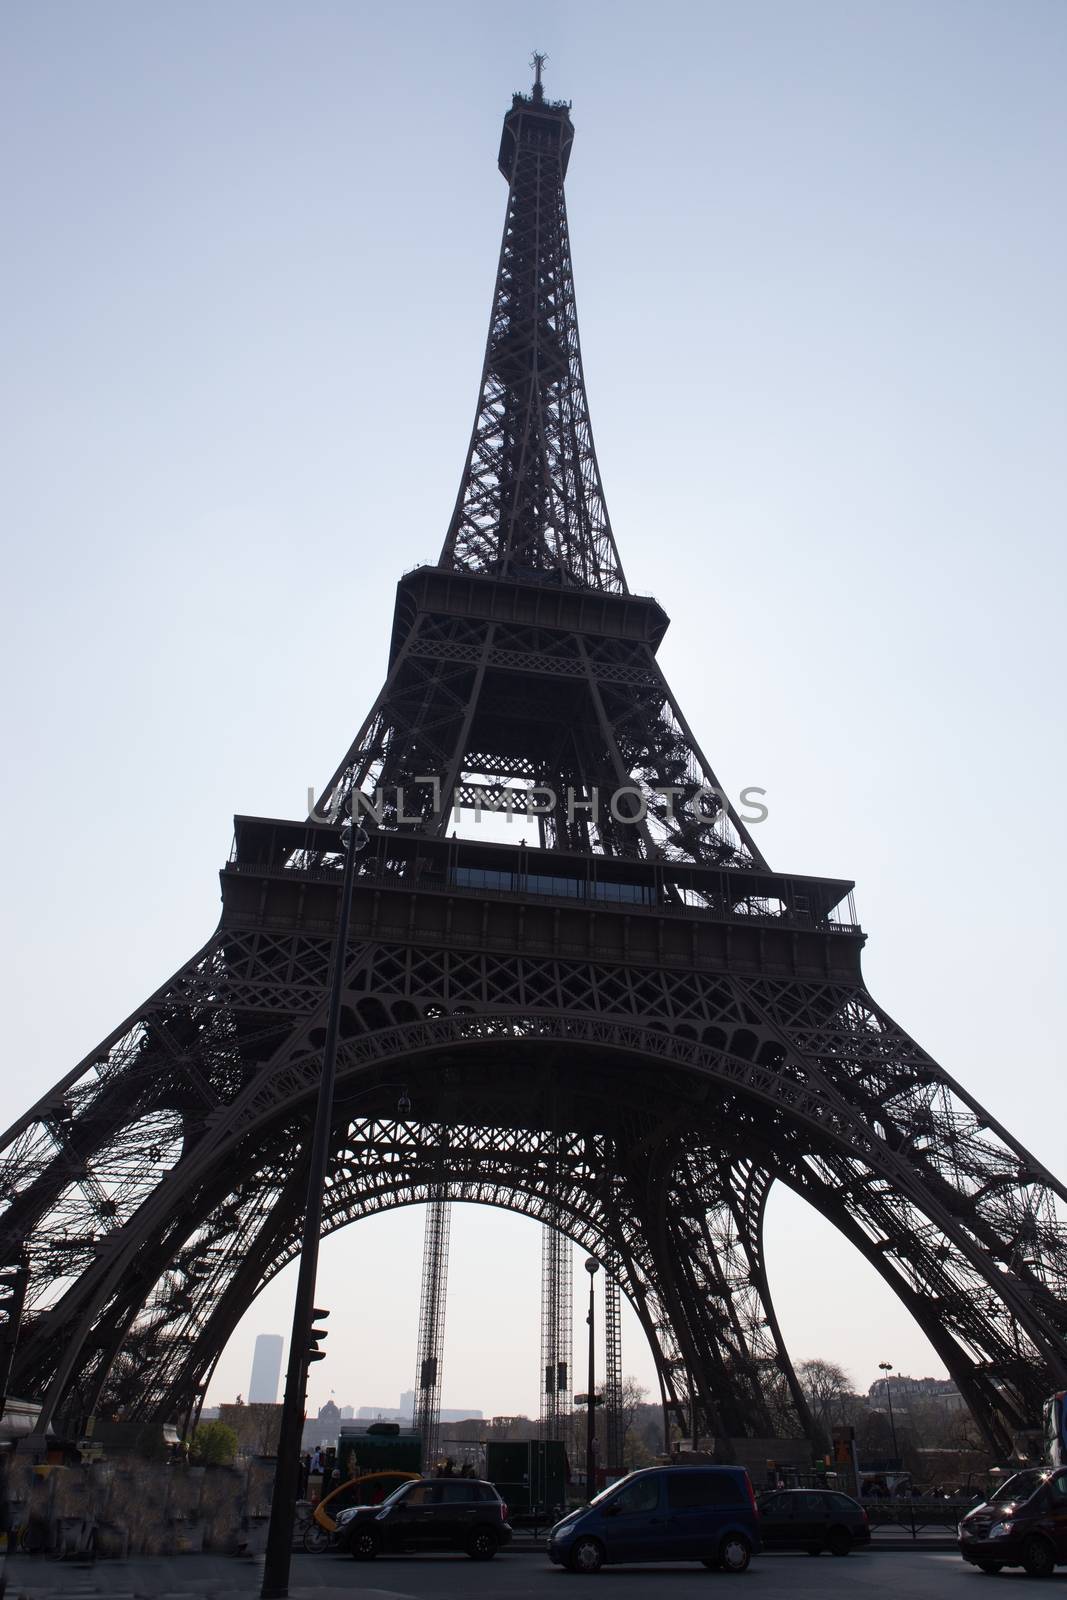 Eiffel Tower in Paris silhouette by mitakag